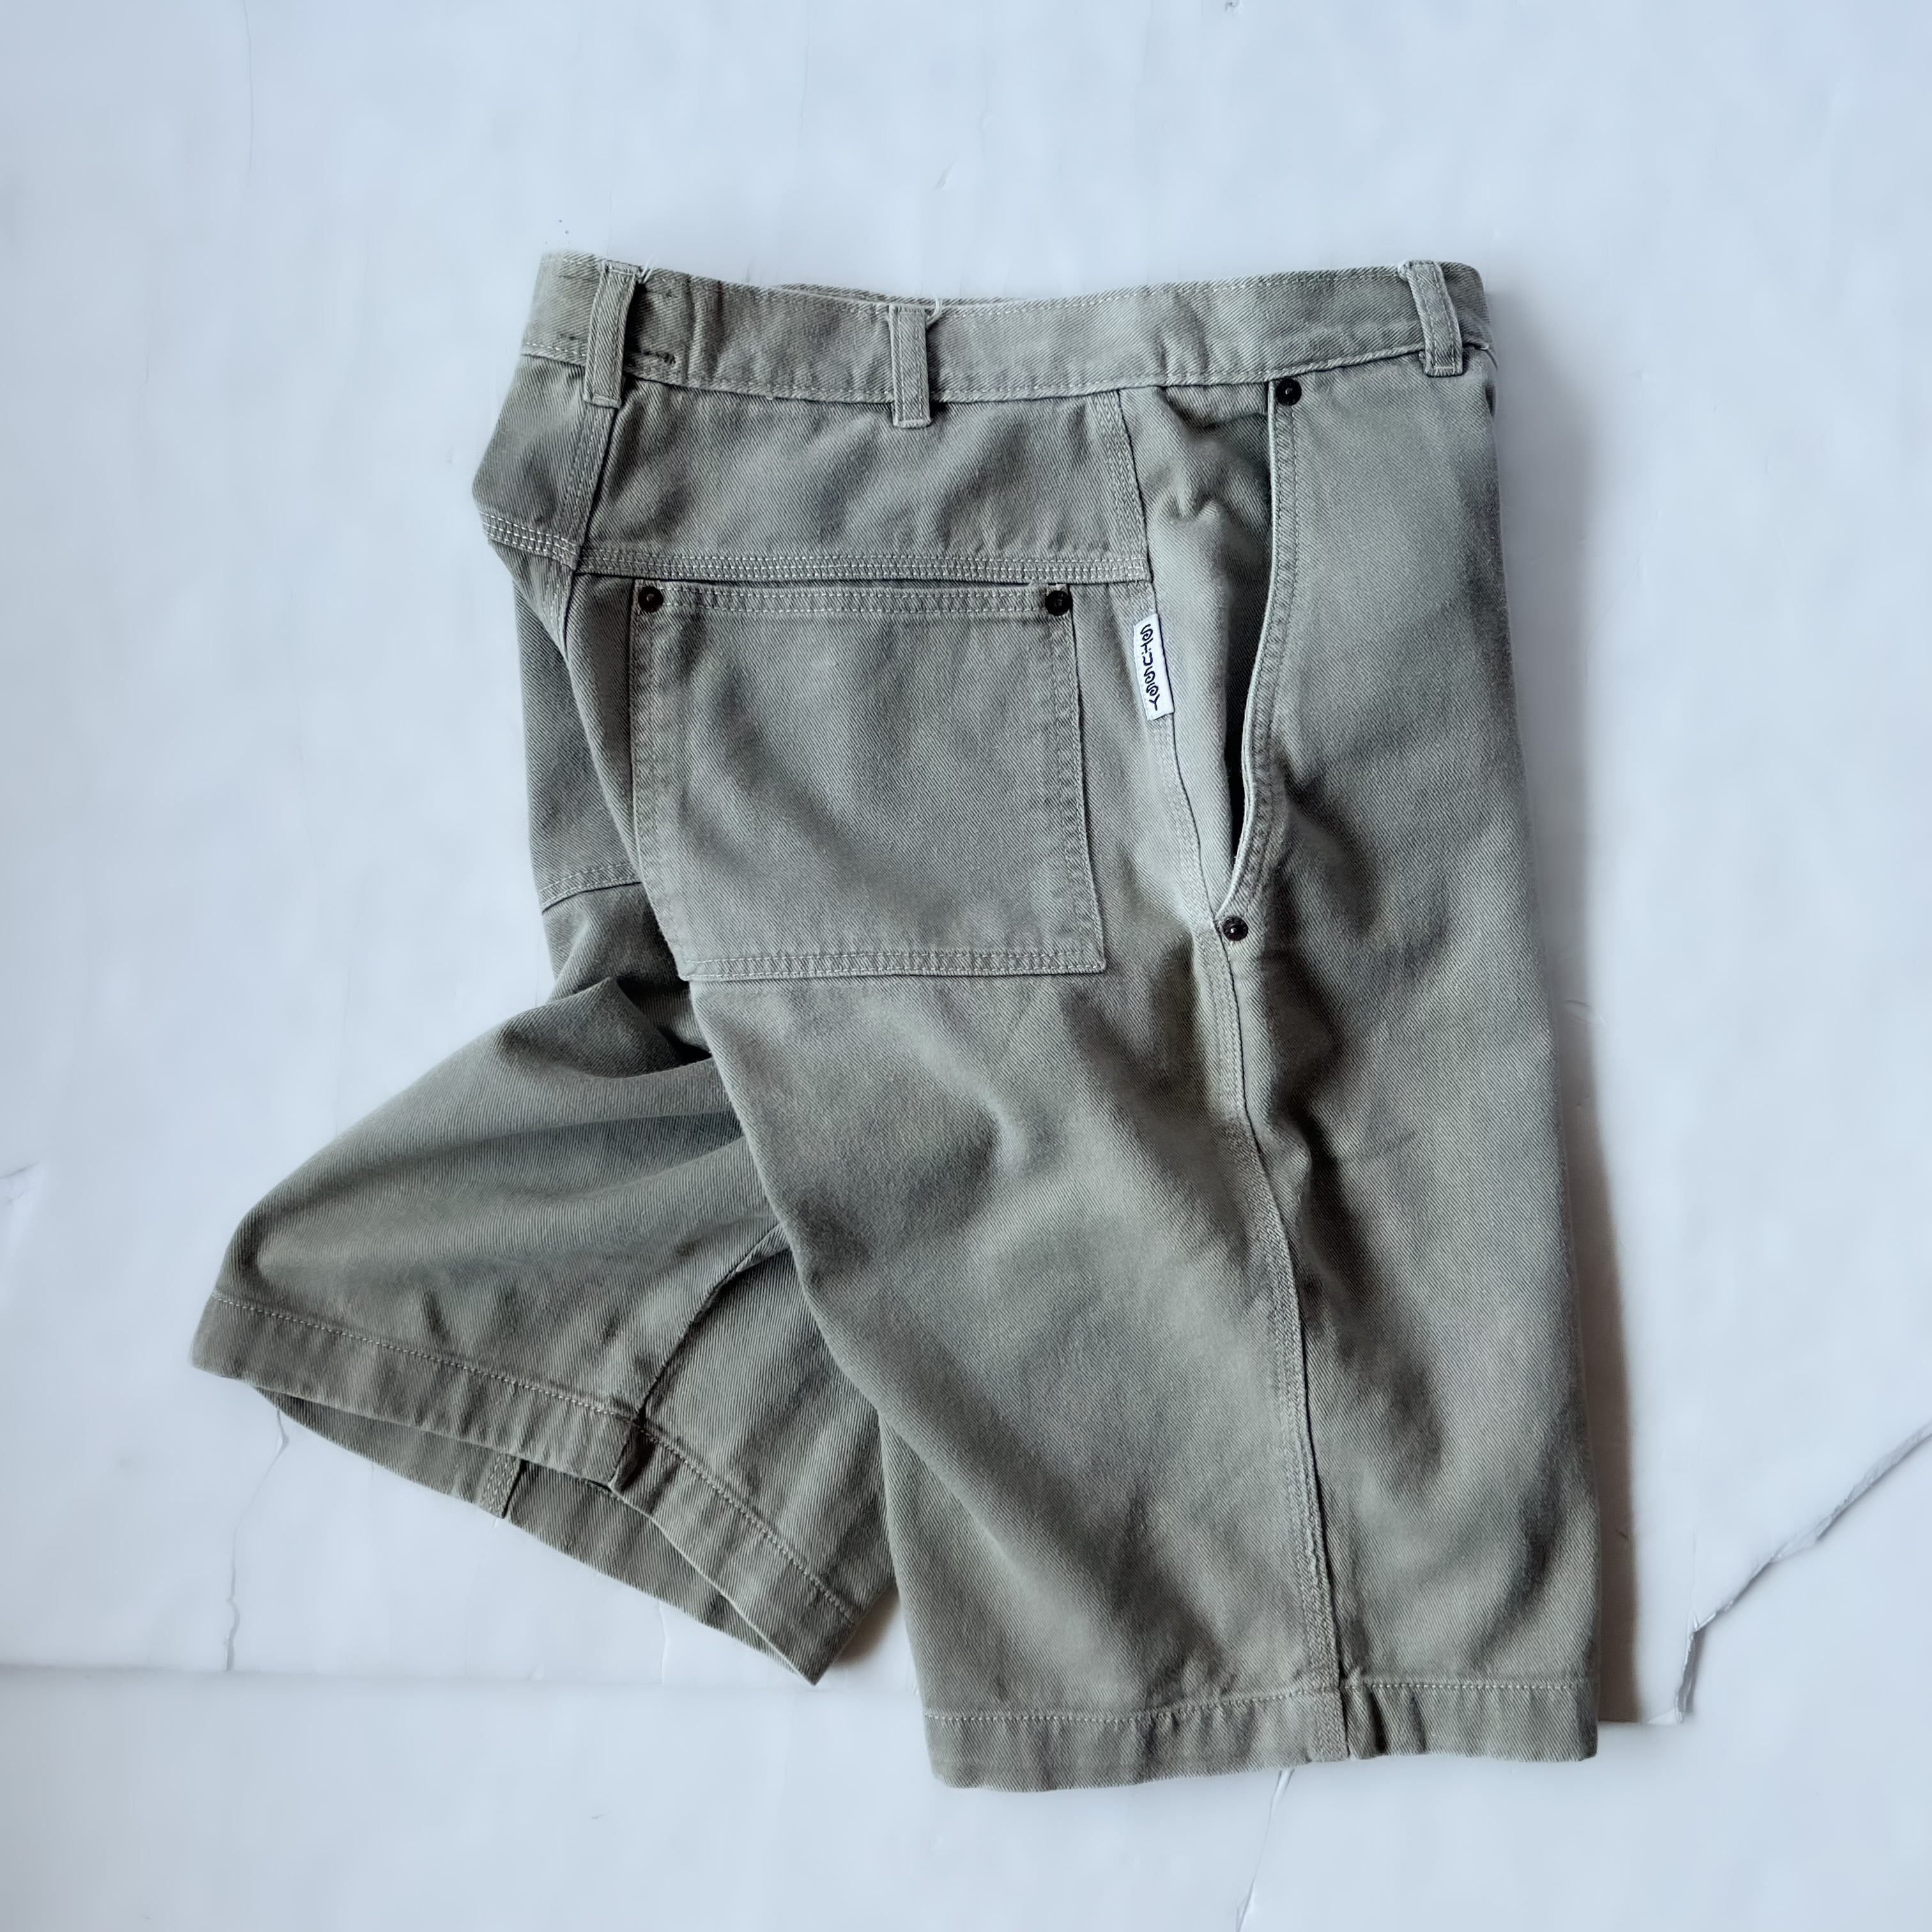 90s “old stussy” short pants made in Fiji 90年代 オールドストゥーシー ショートパンツ ショーツ  anti knovum（アンタイノーム）